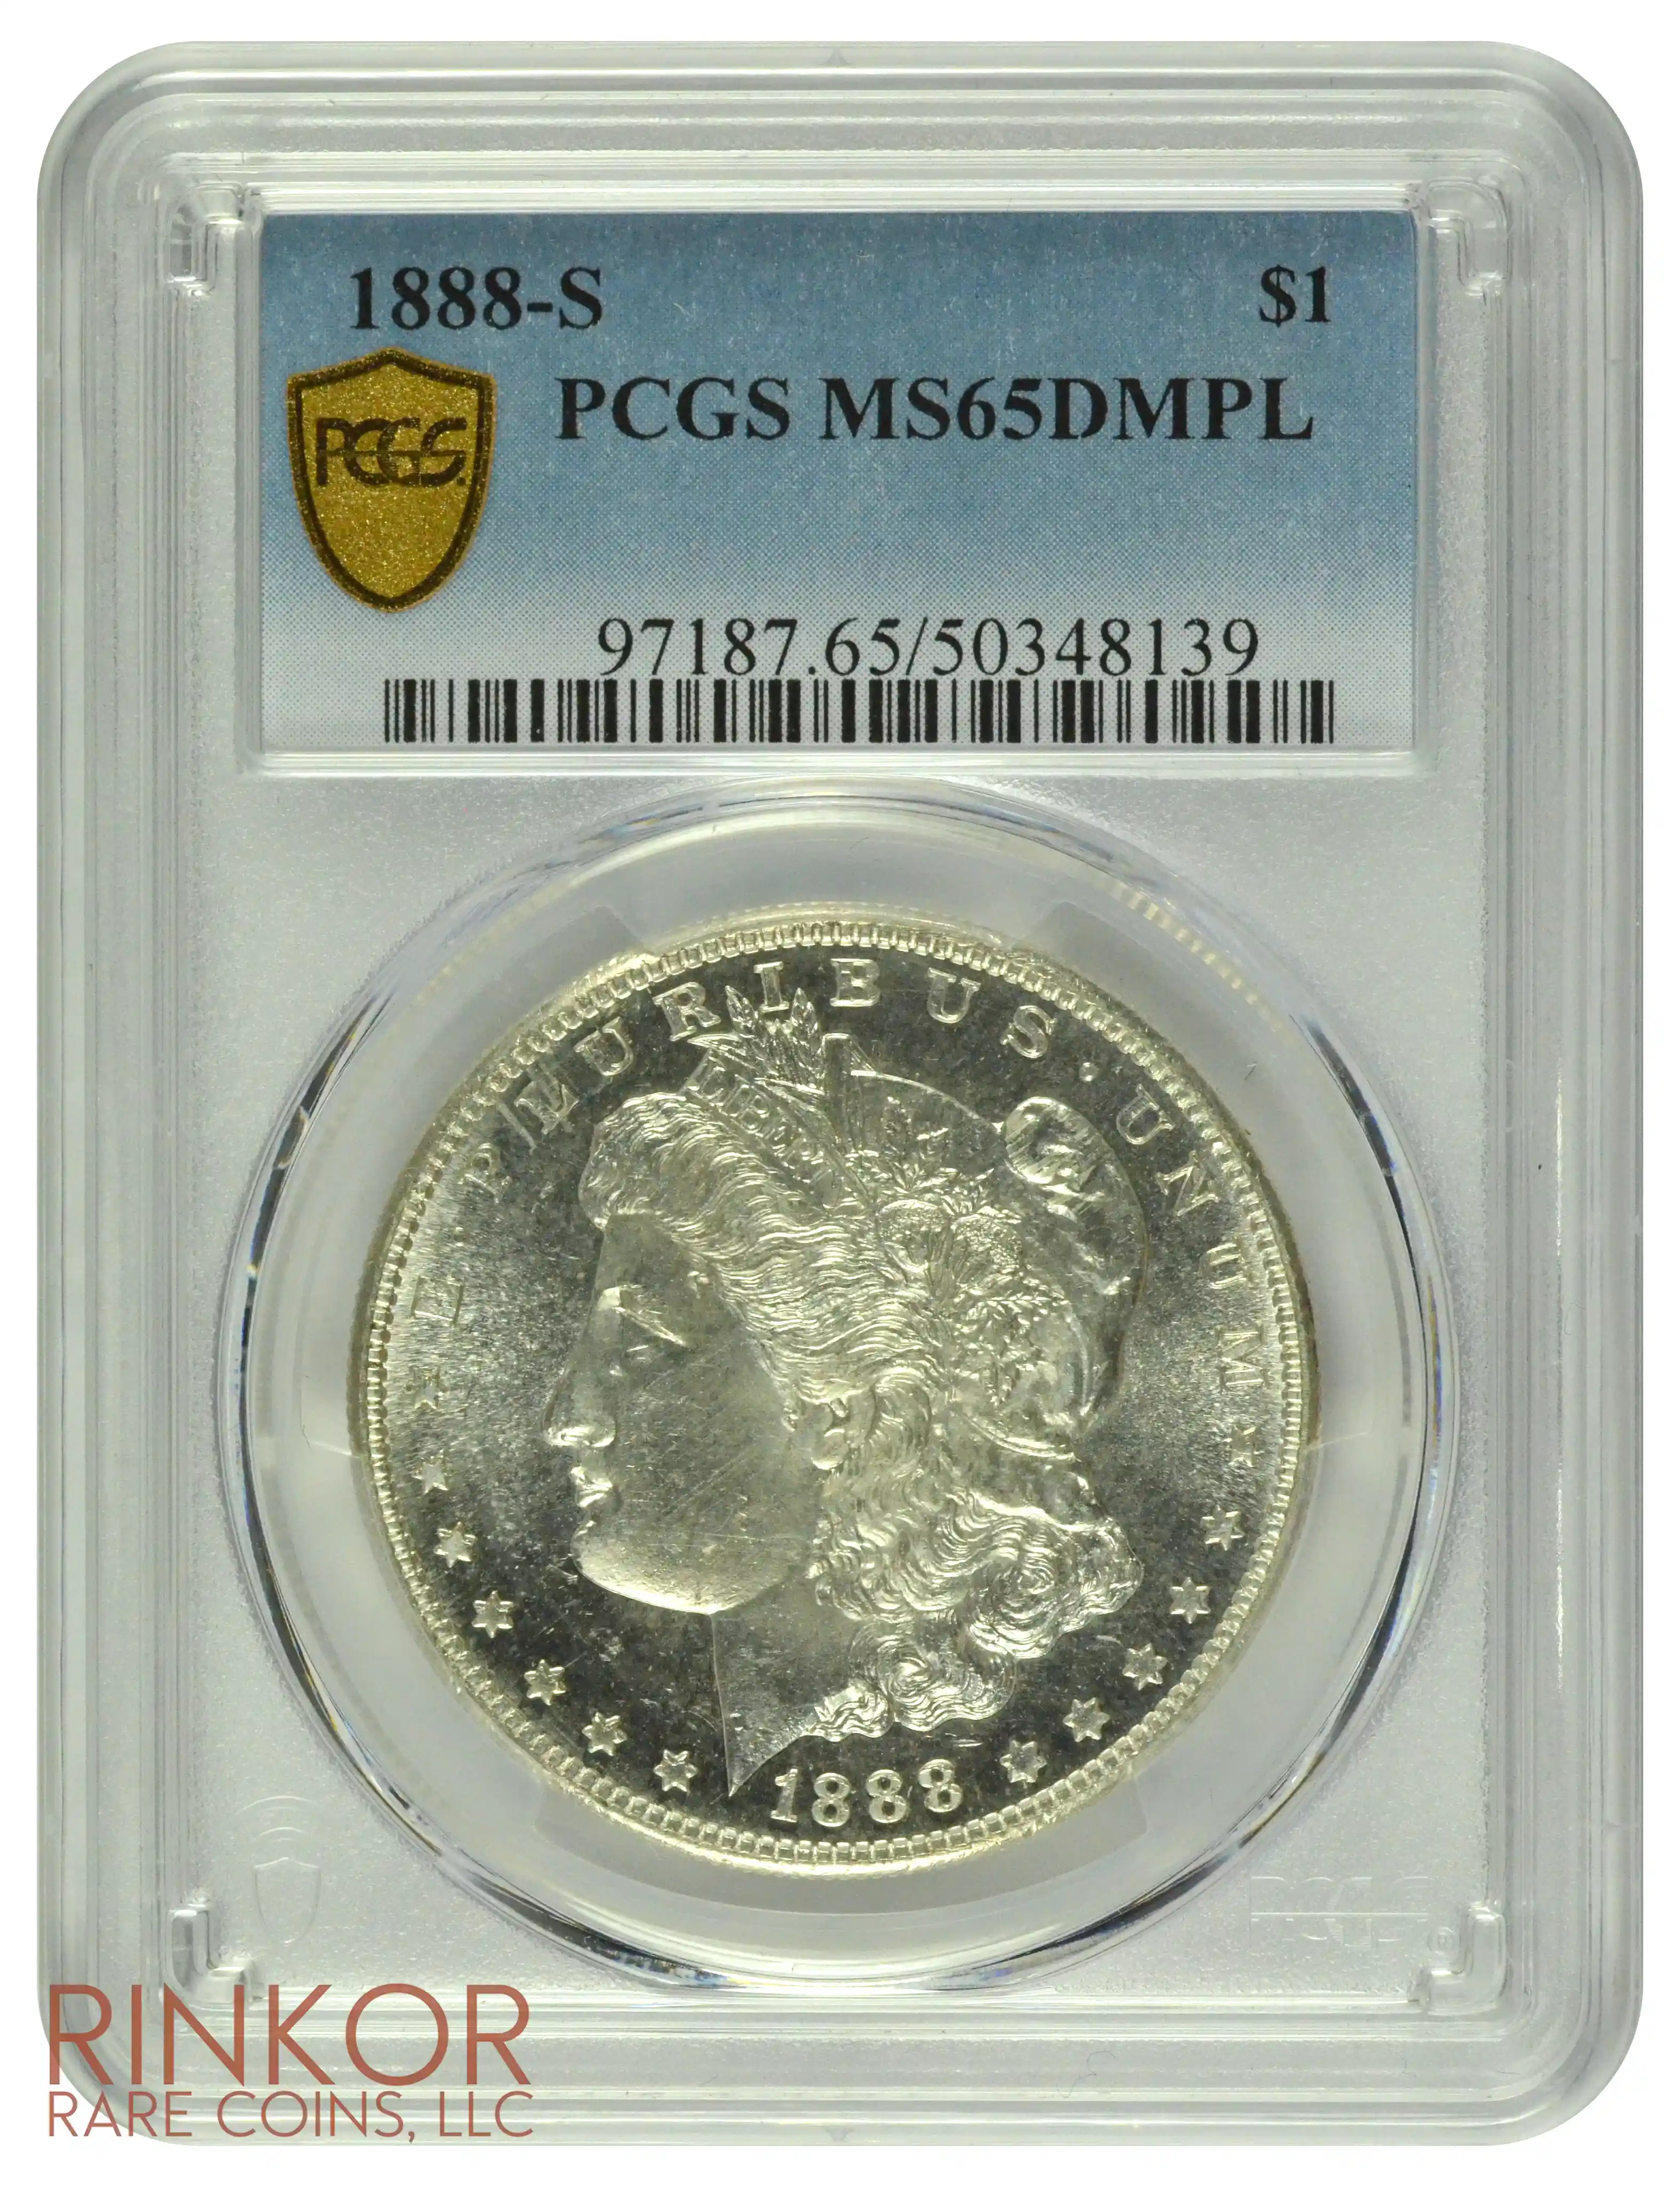 1888-S $1 PCGS MS 65 DMPL